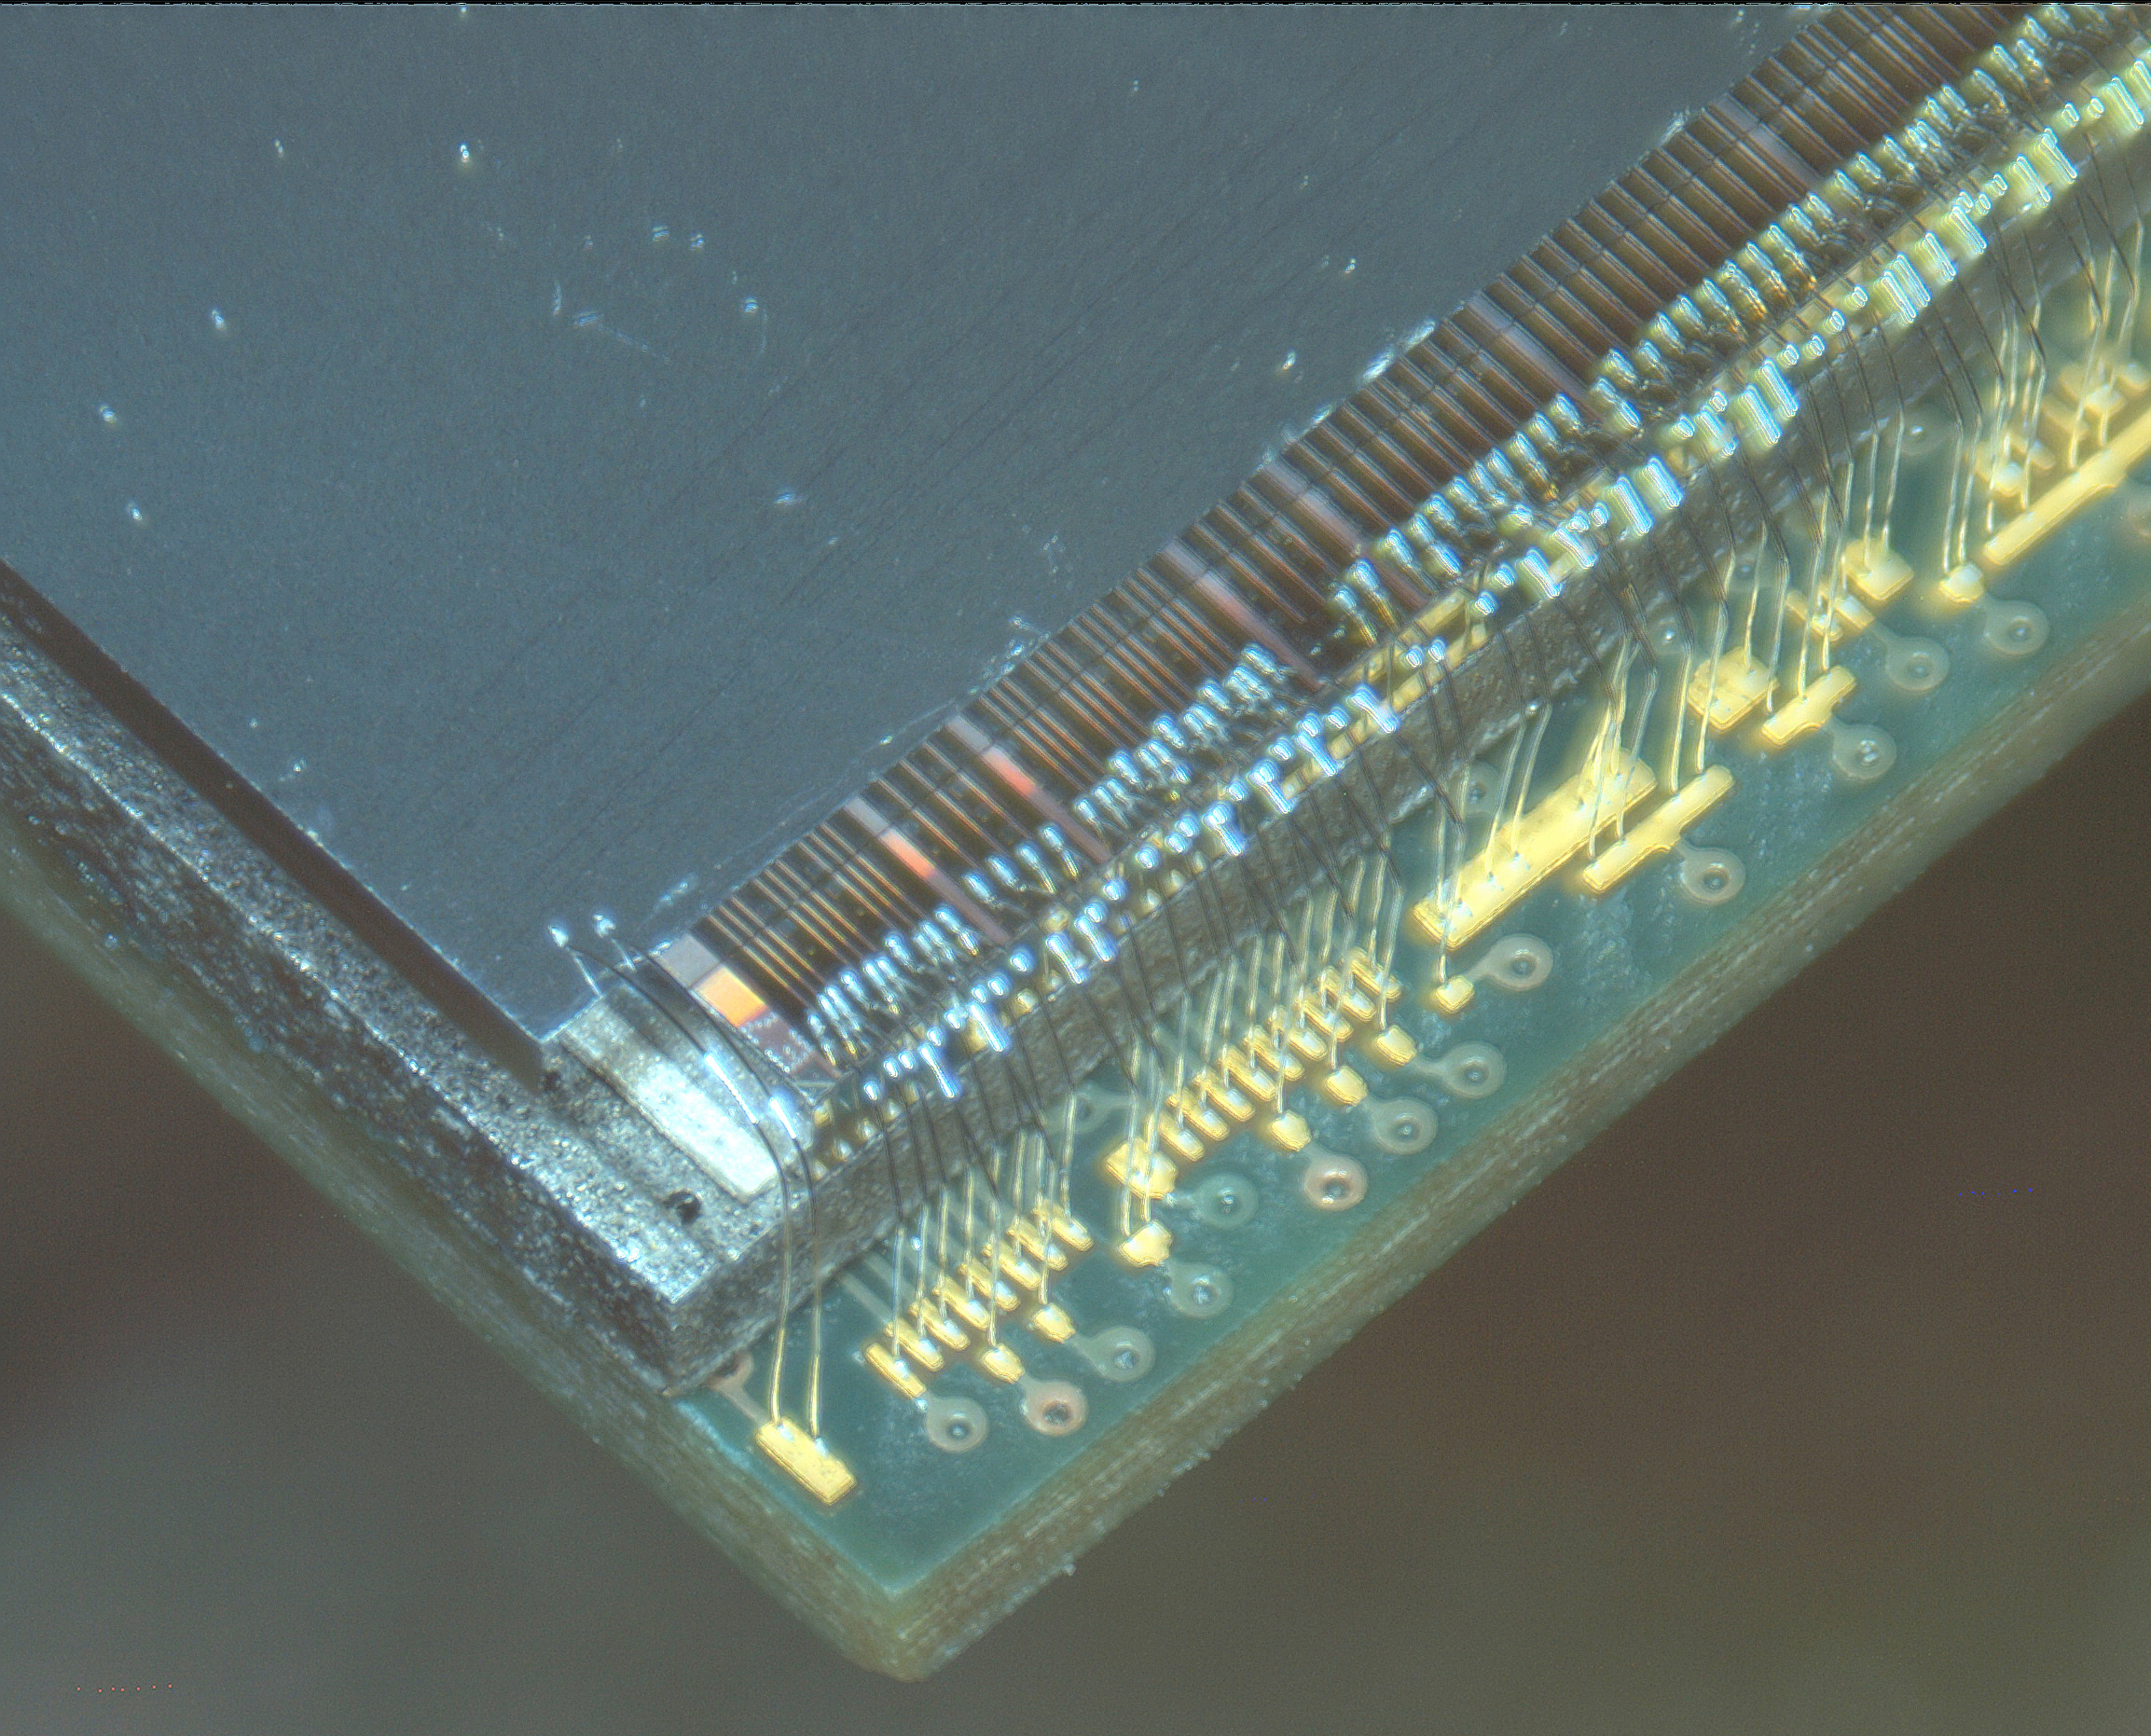 Microscope image of an ExcaliburRX sensor module